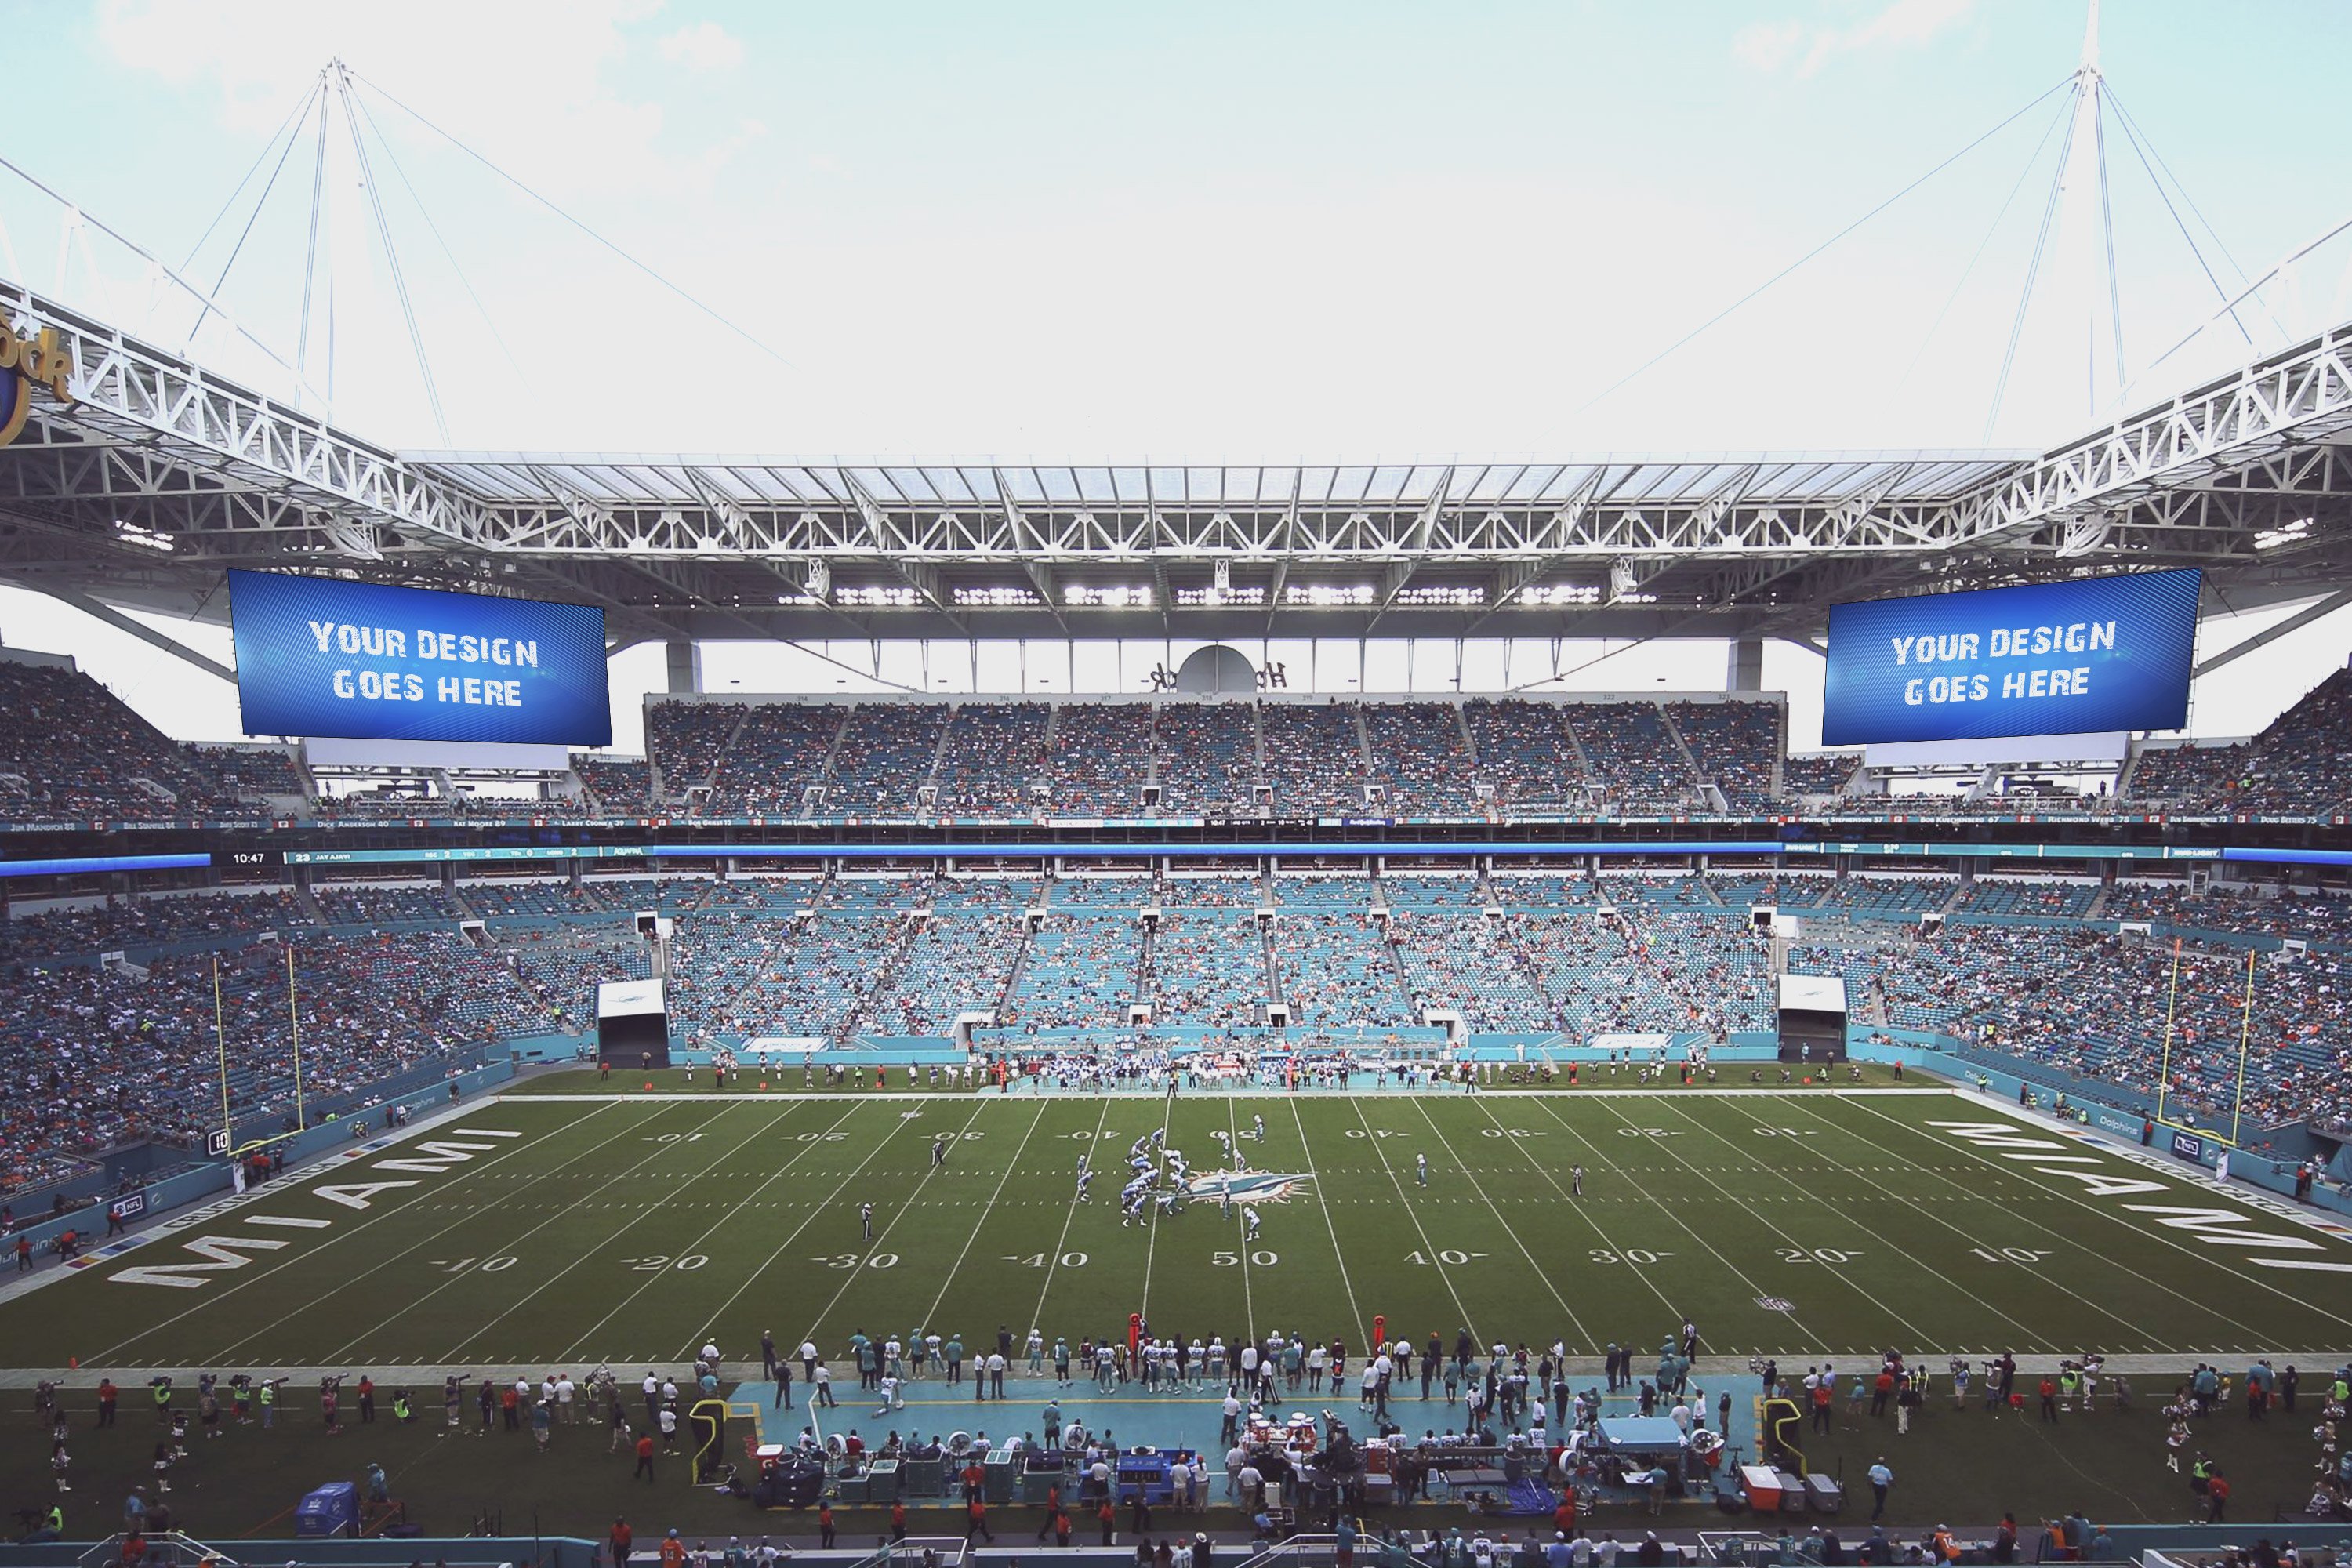 NFL Stadium Screen Mock-up #5 cover image.